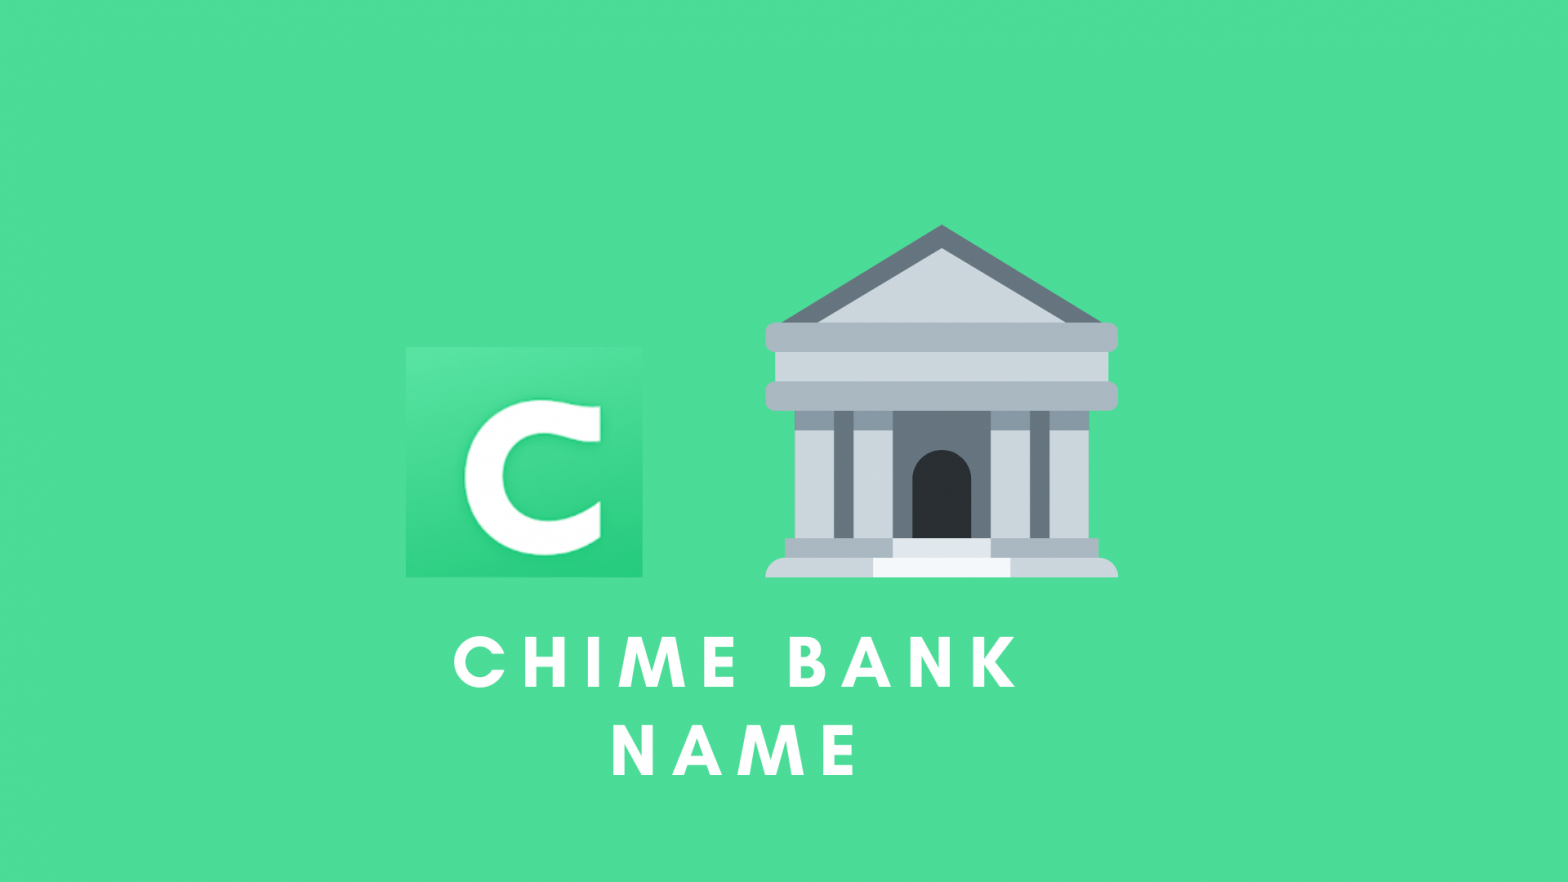 Chime Bank name and address